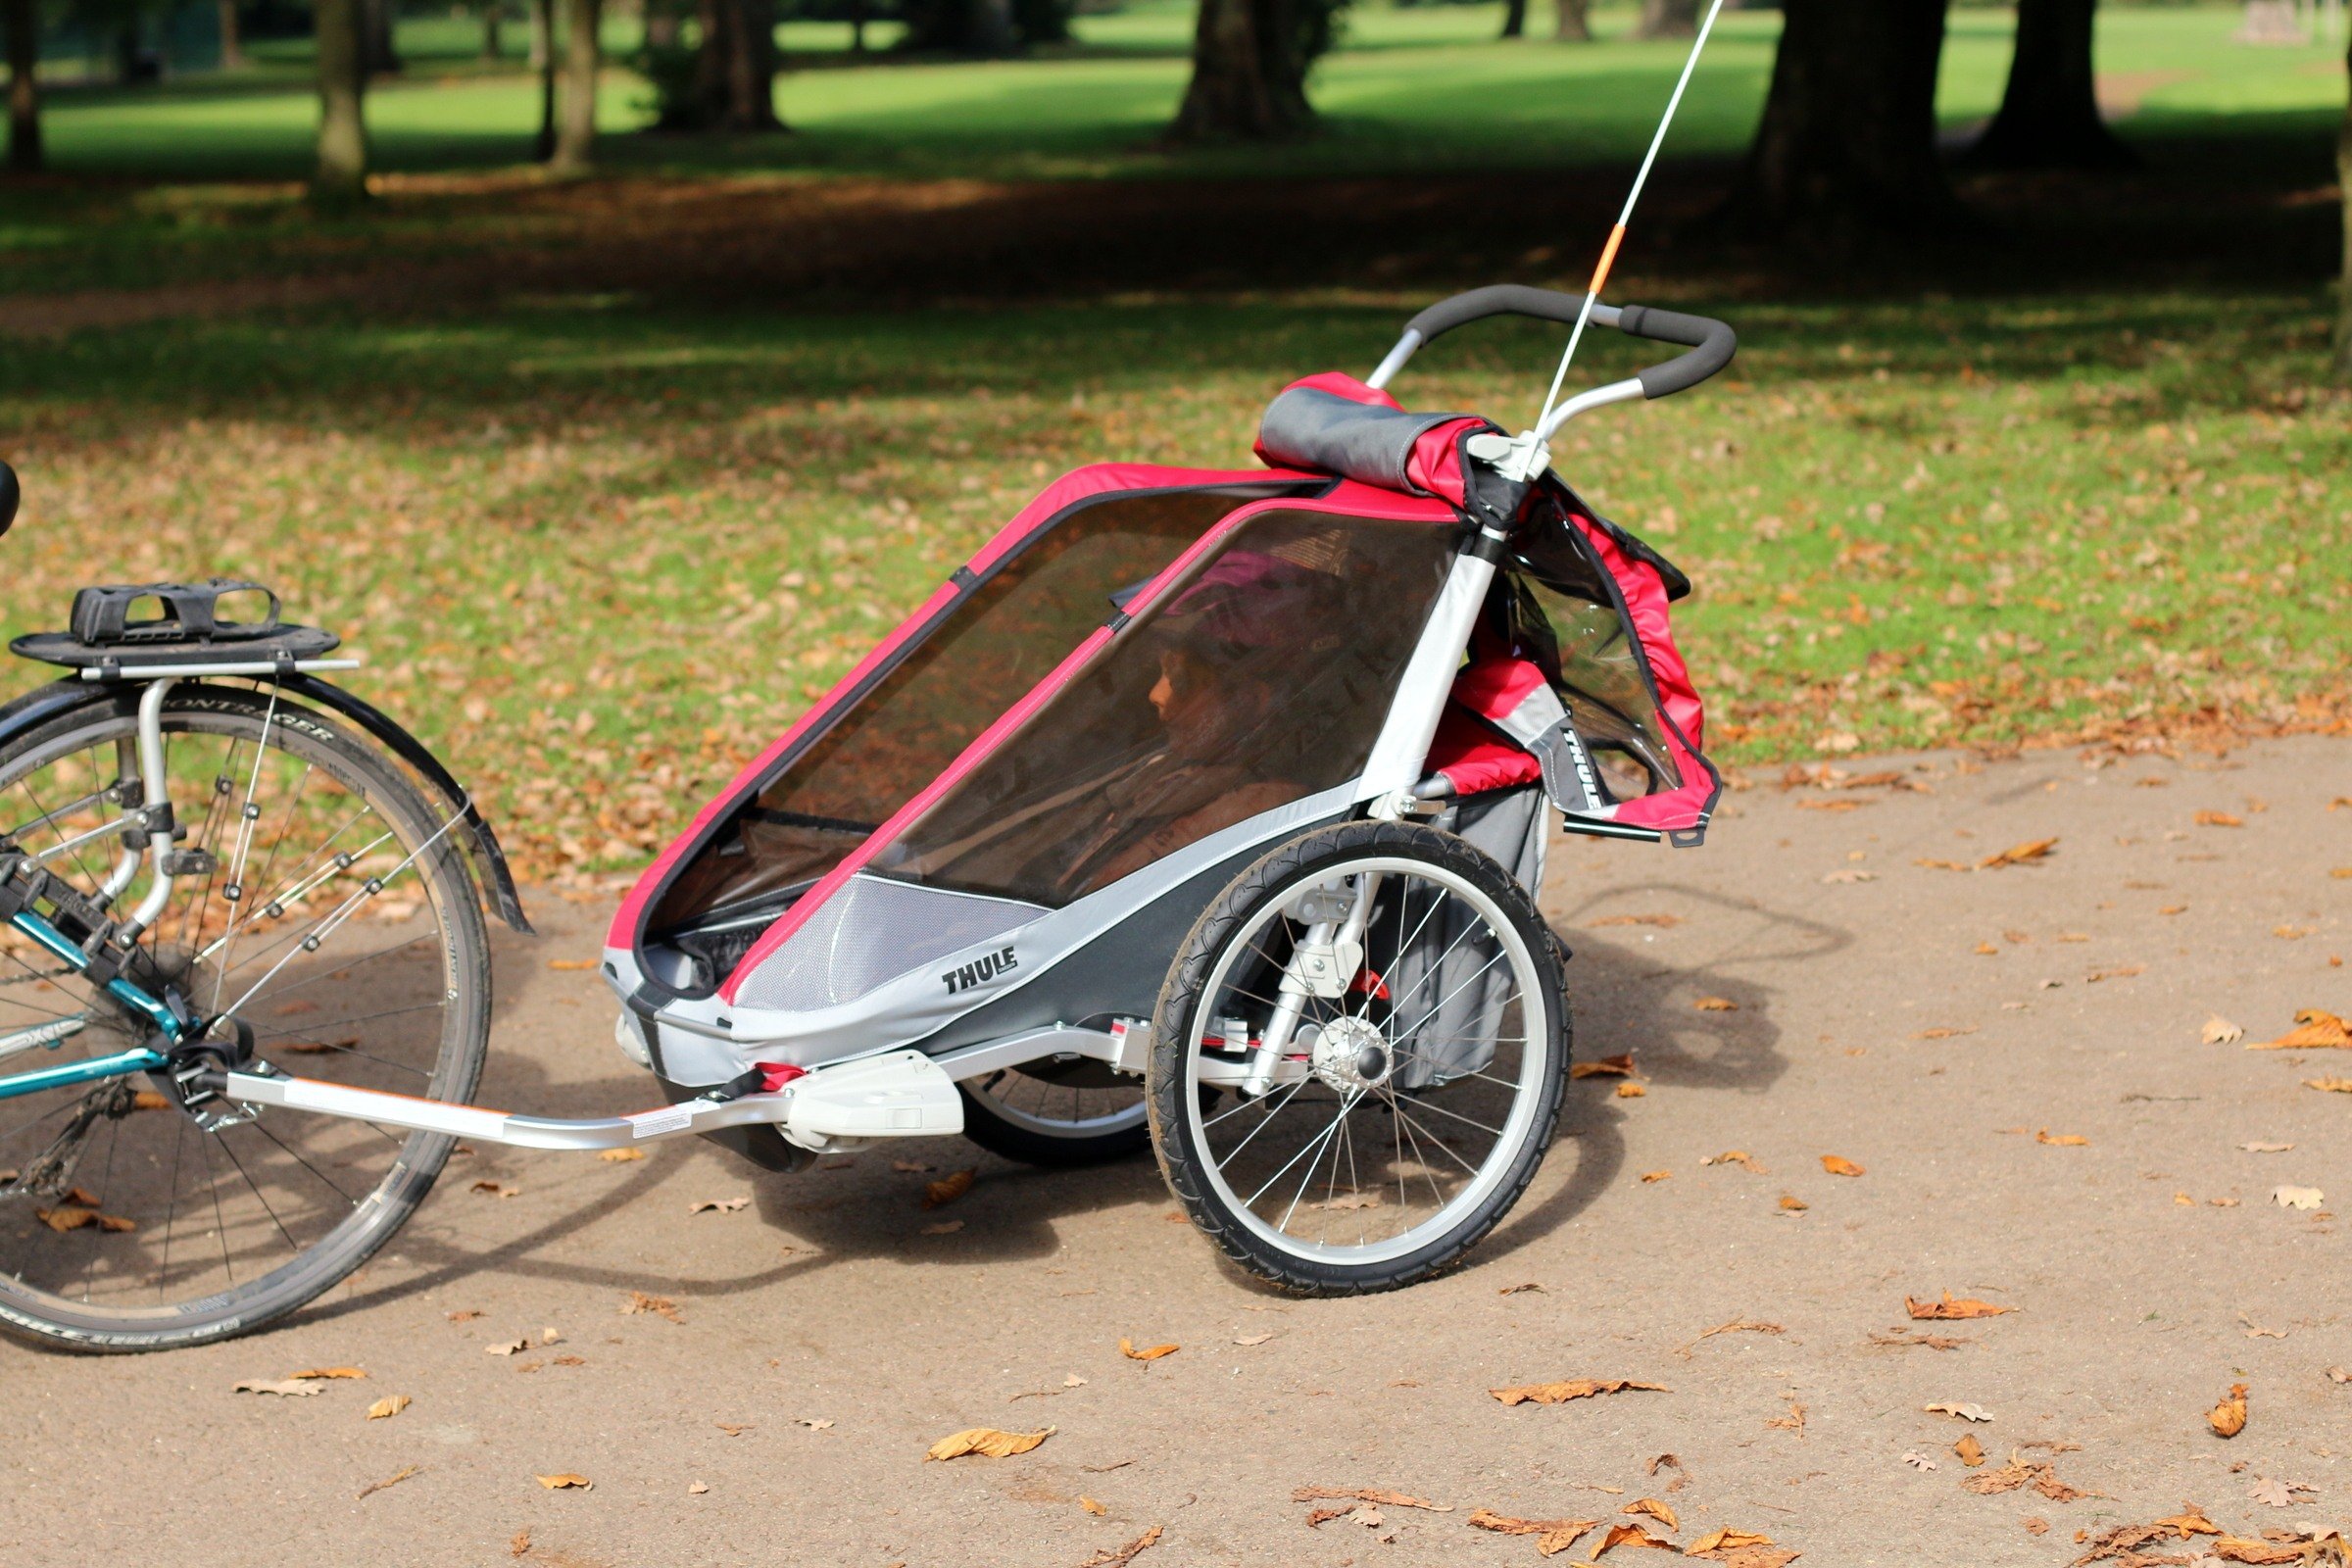 chariot cougar stroller